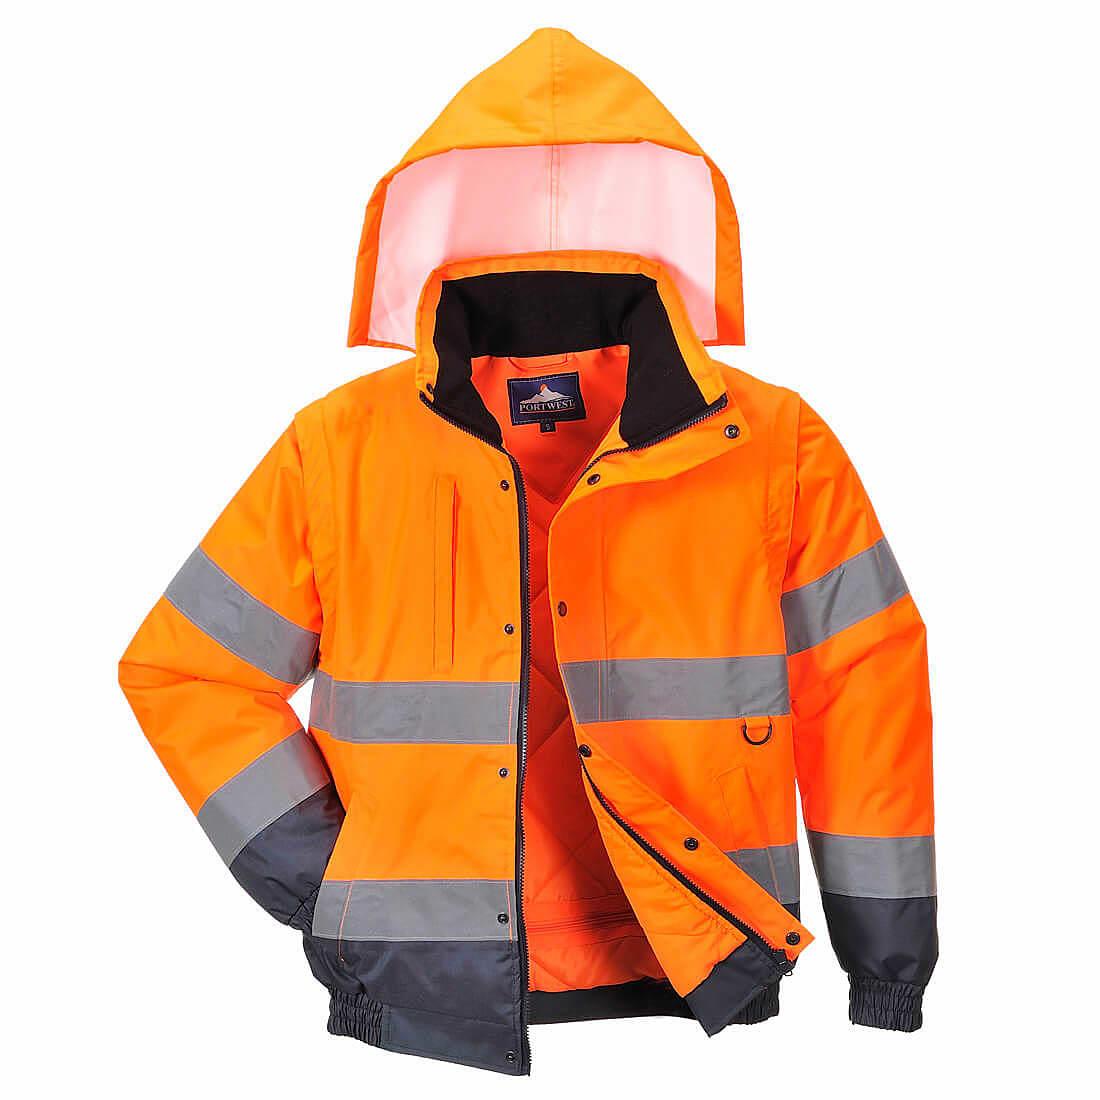 Portwest Hi-Viz 2-in-1 Jacket in Orange (Product Code: C468)